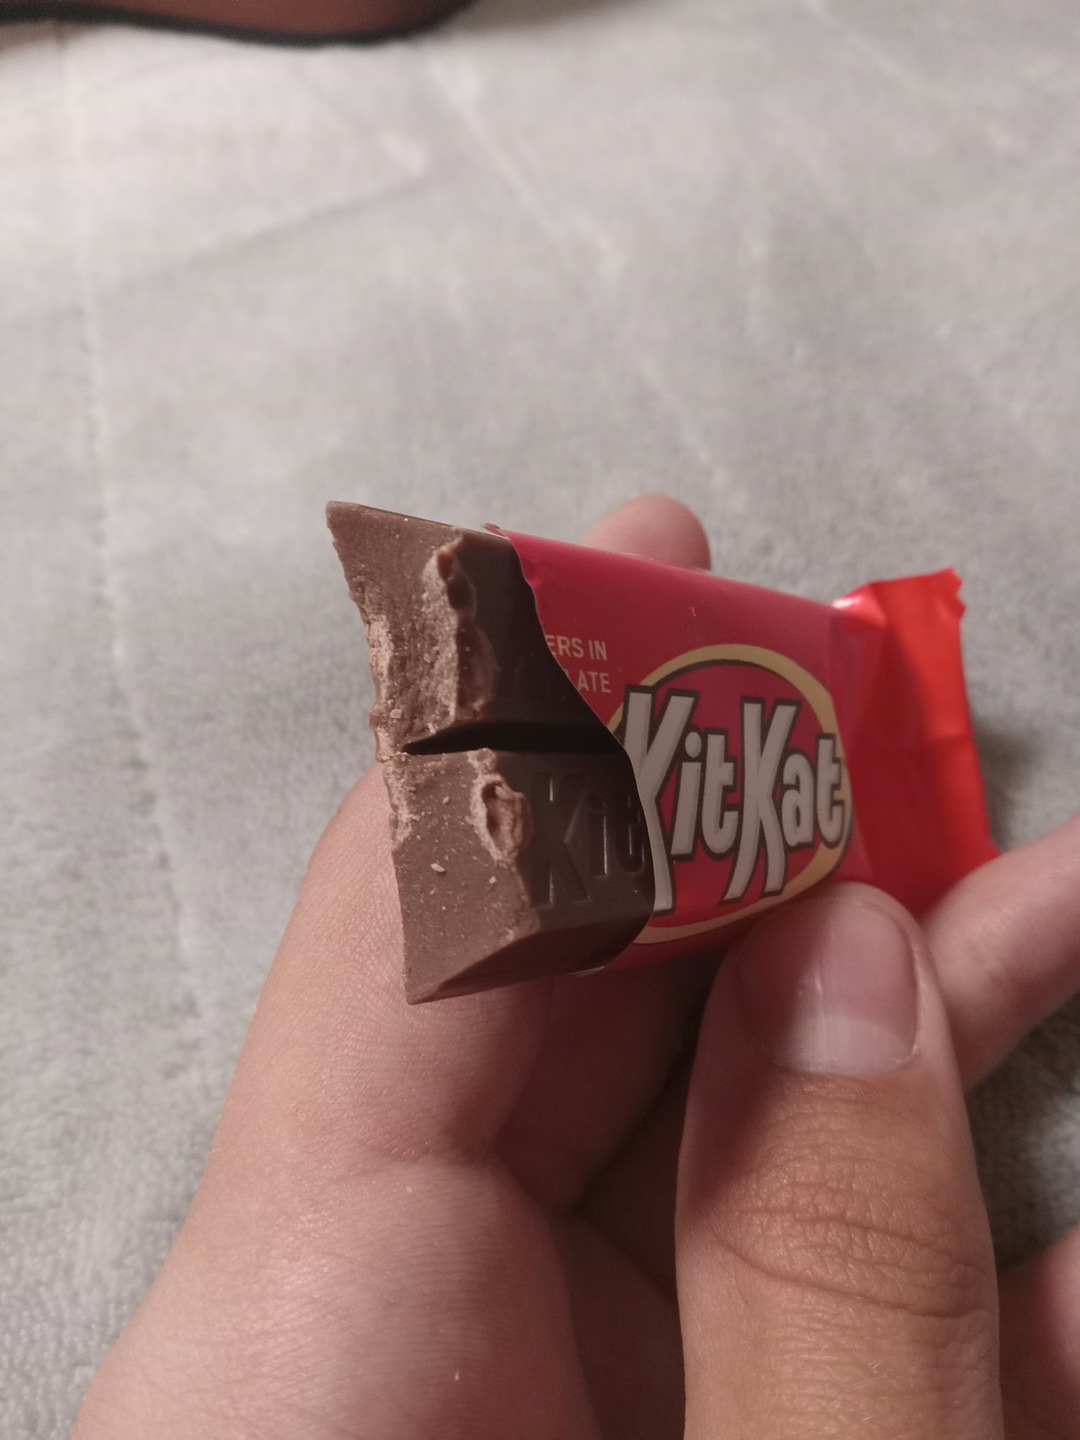 dongs in a waferless KitKat - meme